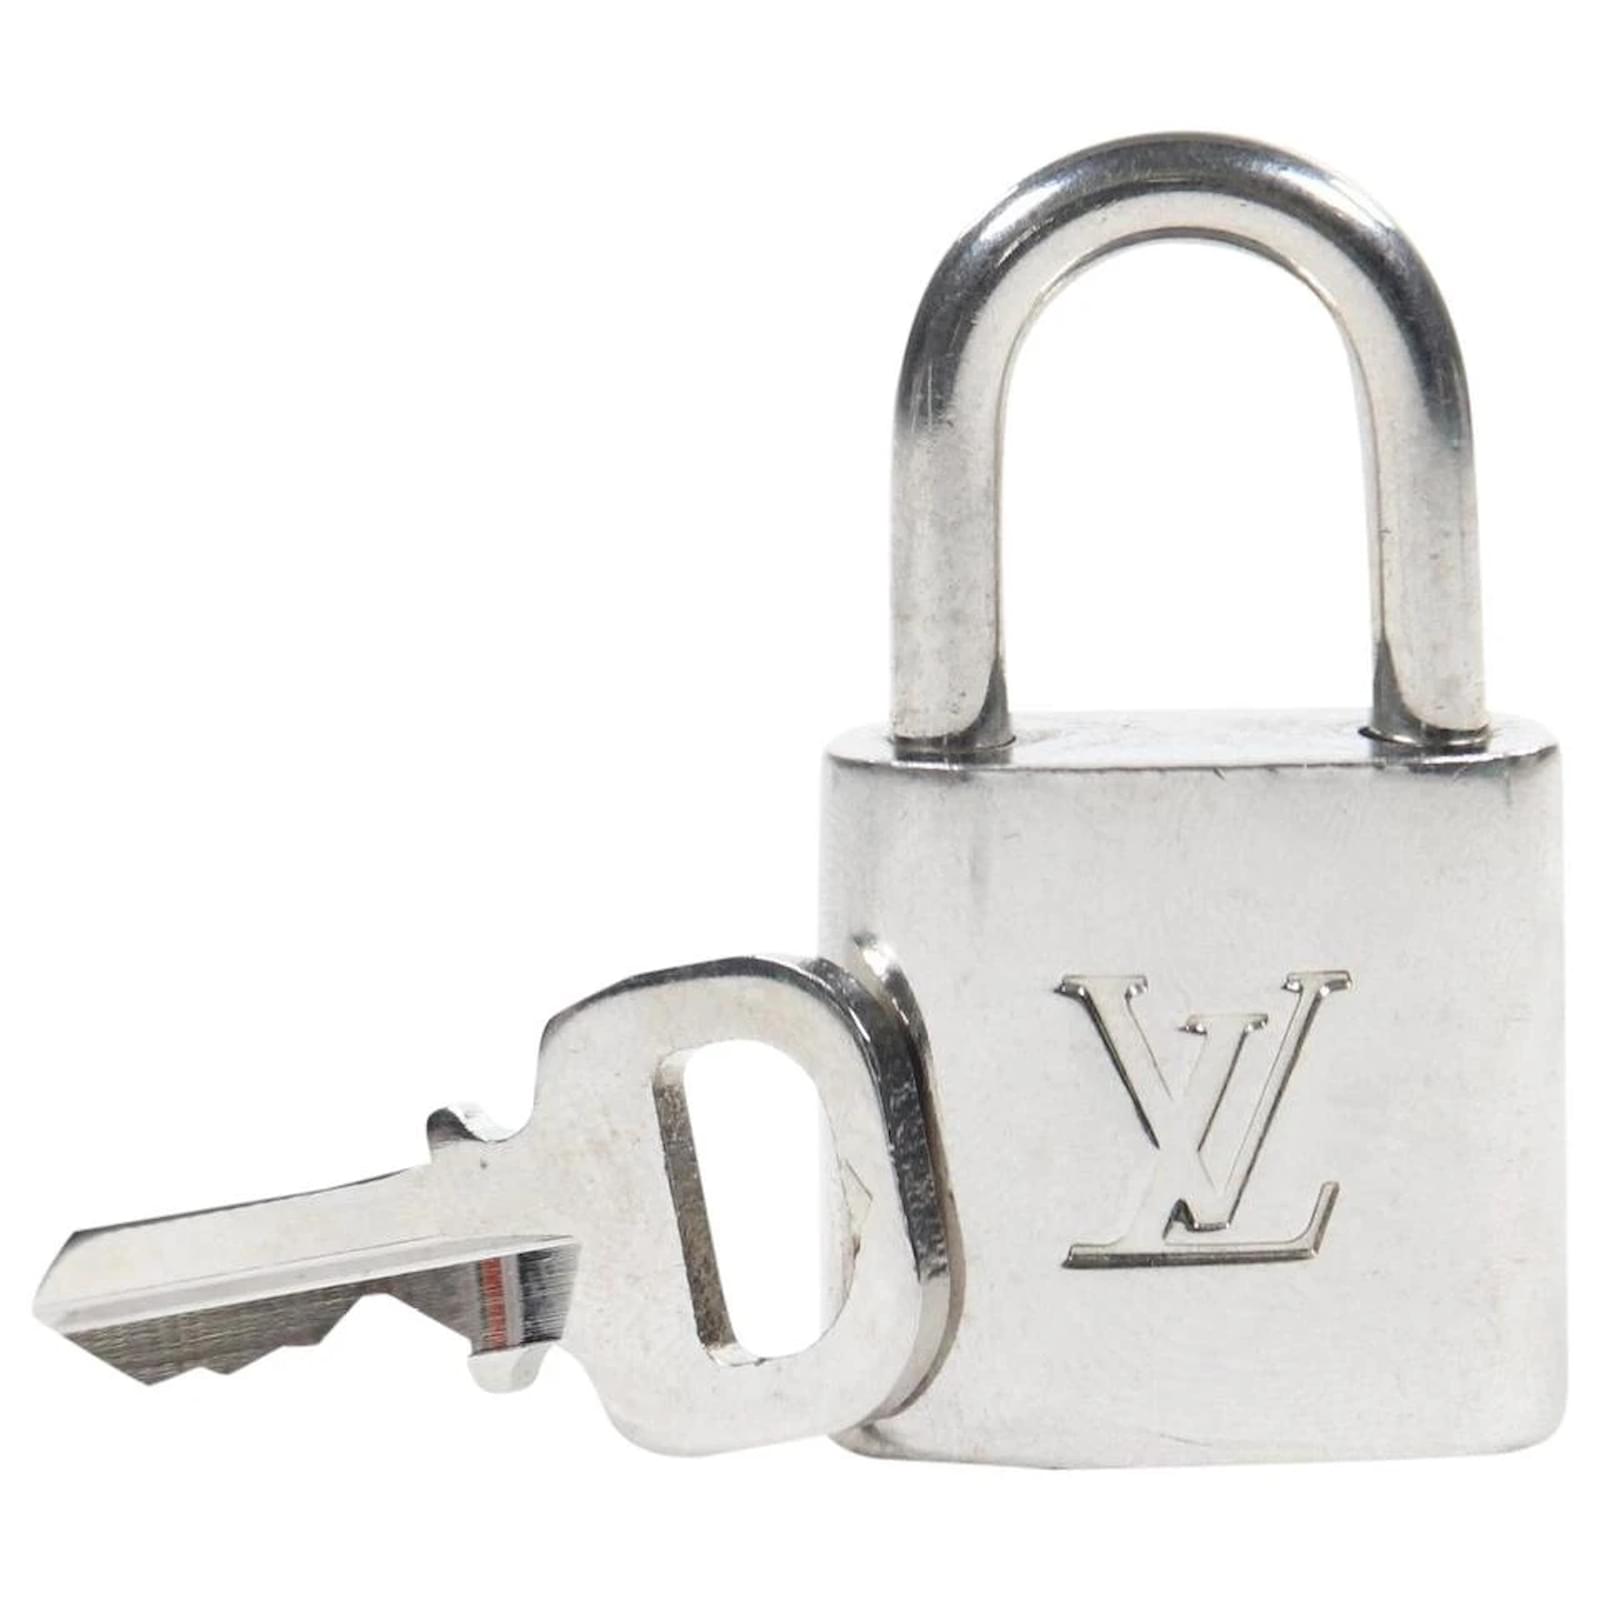 Louis Vuitton Silver Lock and Key Set Padlock Bag Charm 9LV1104